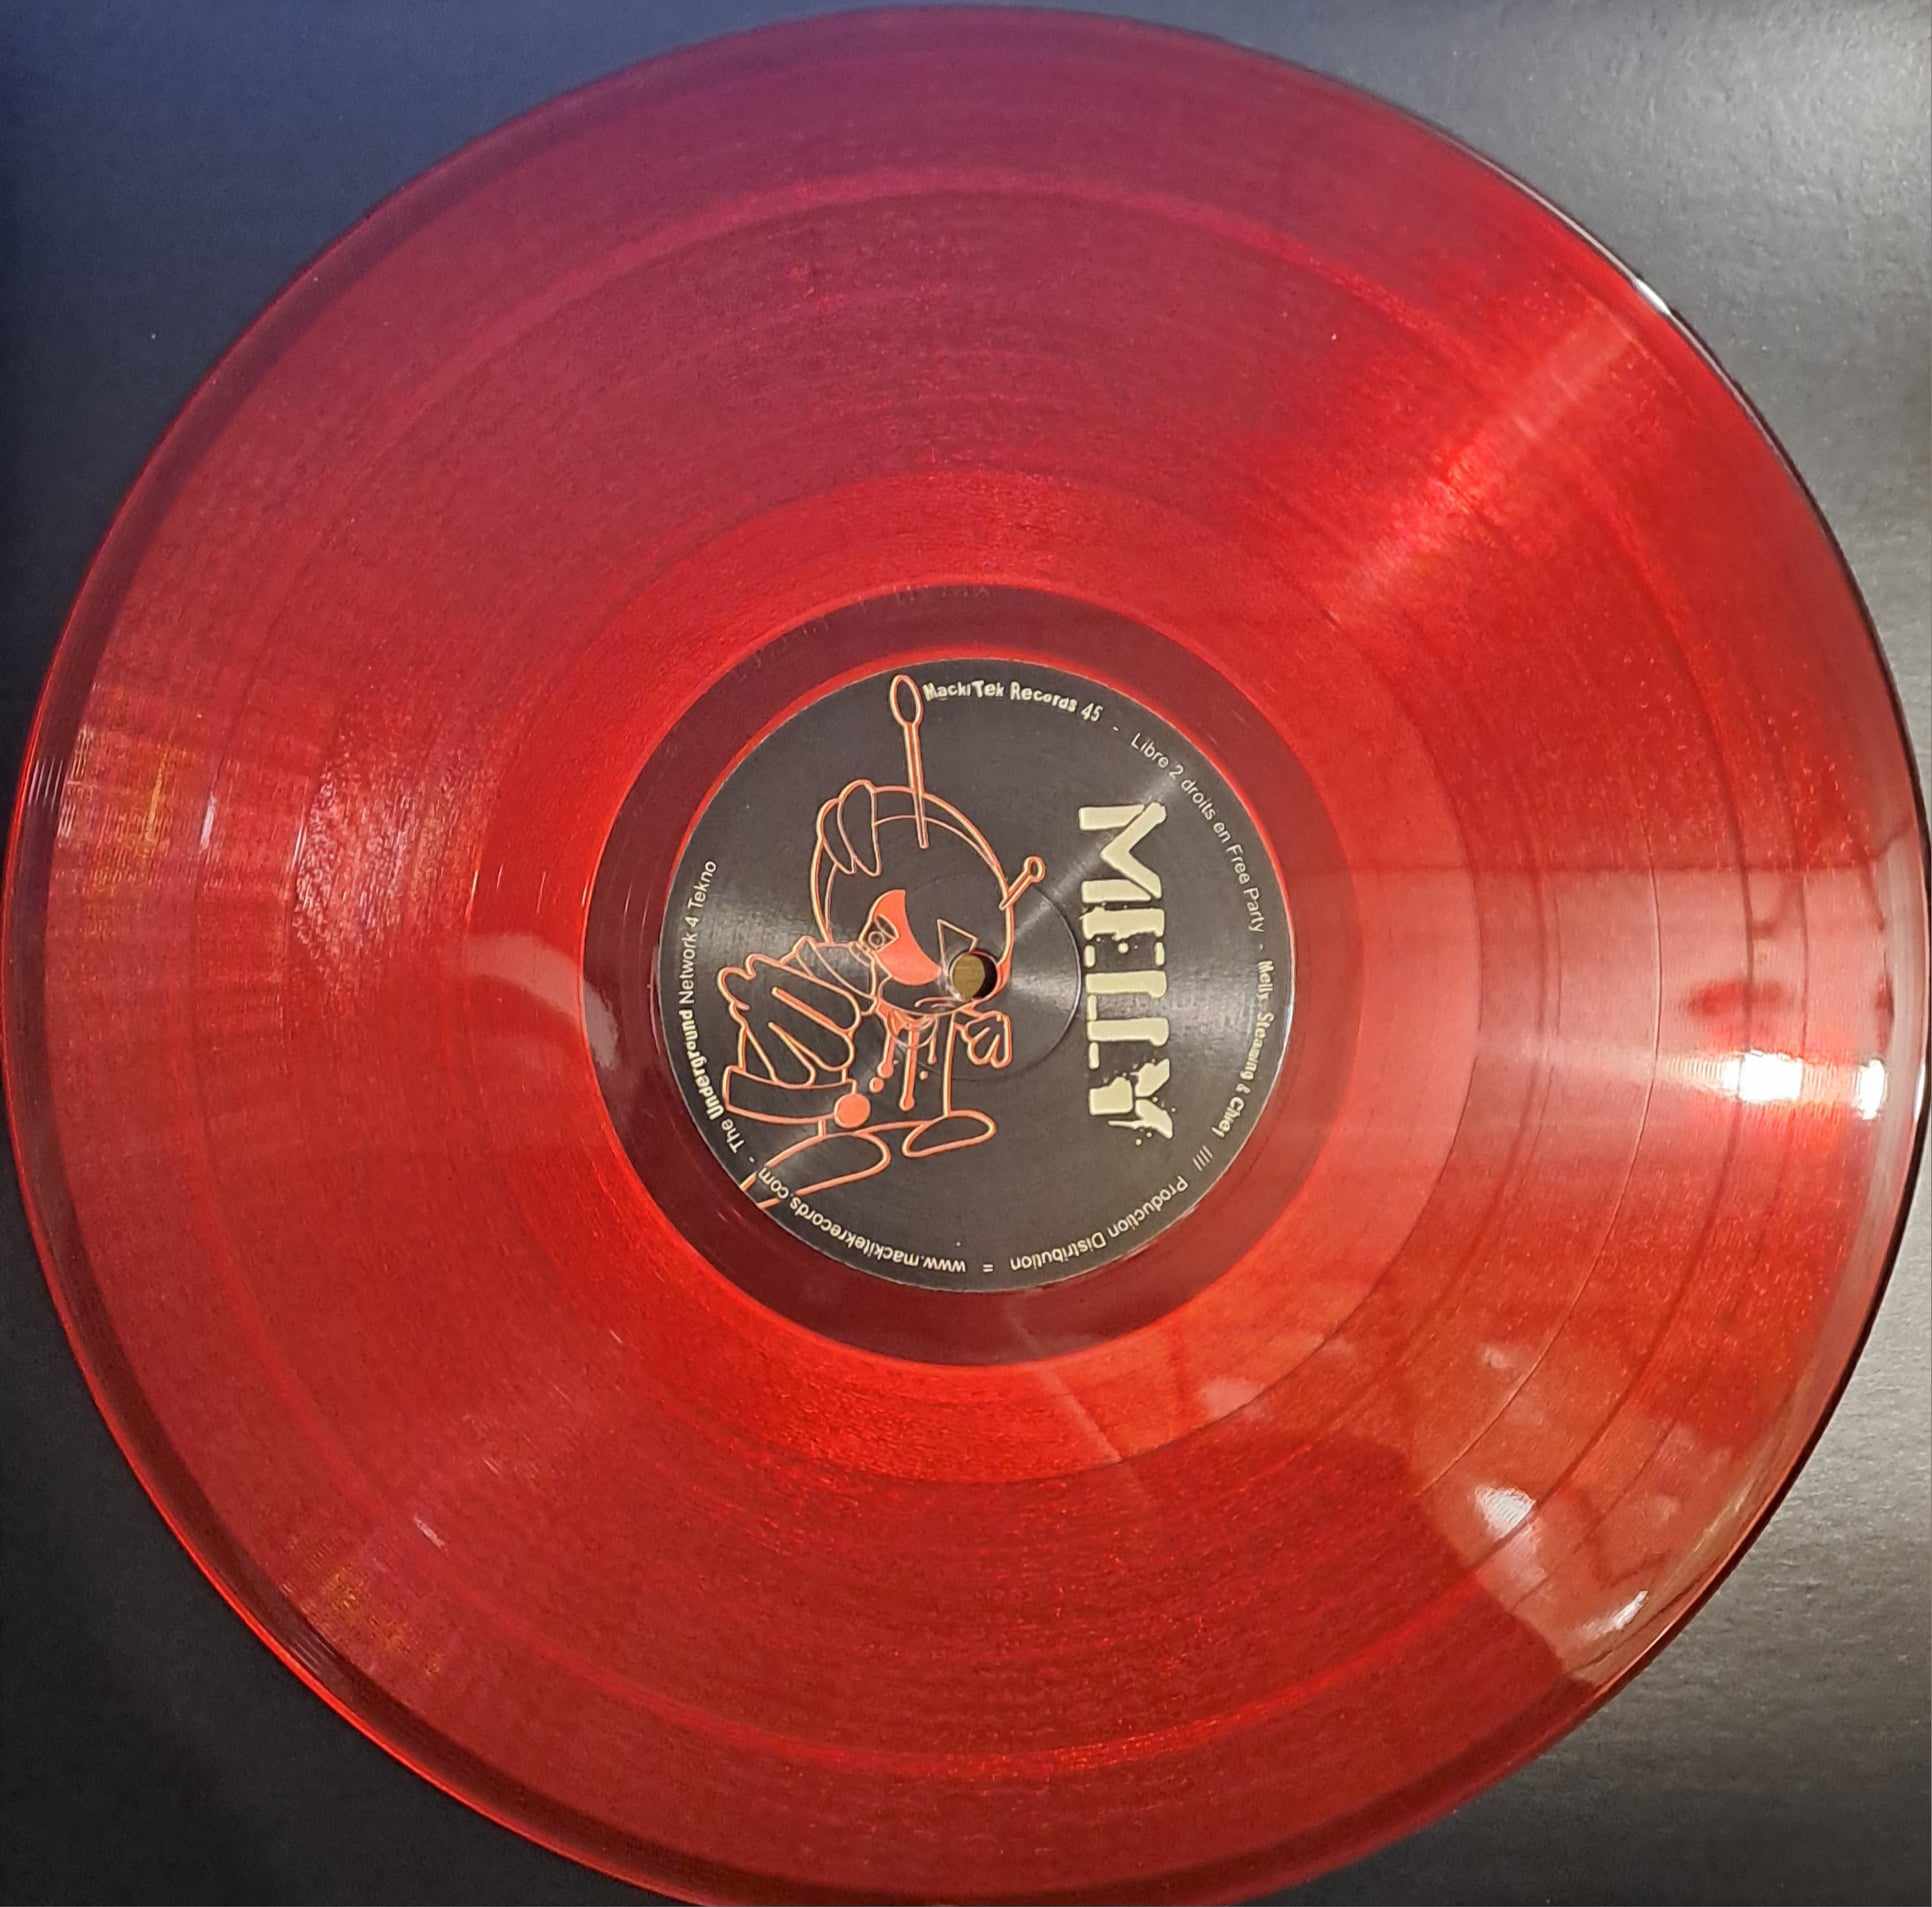 Mackitek 45 RED - vinyle freetekno